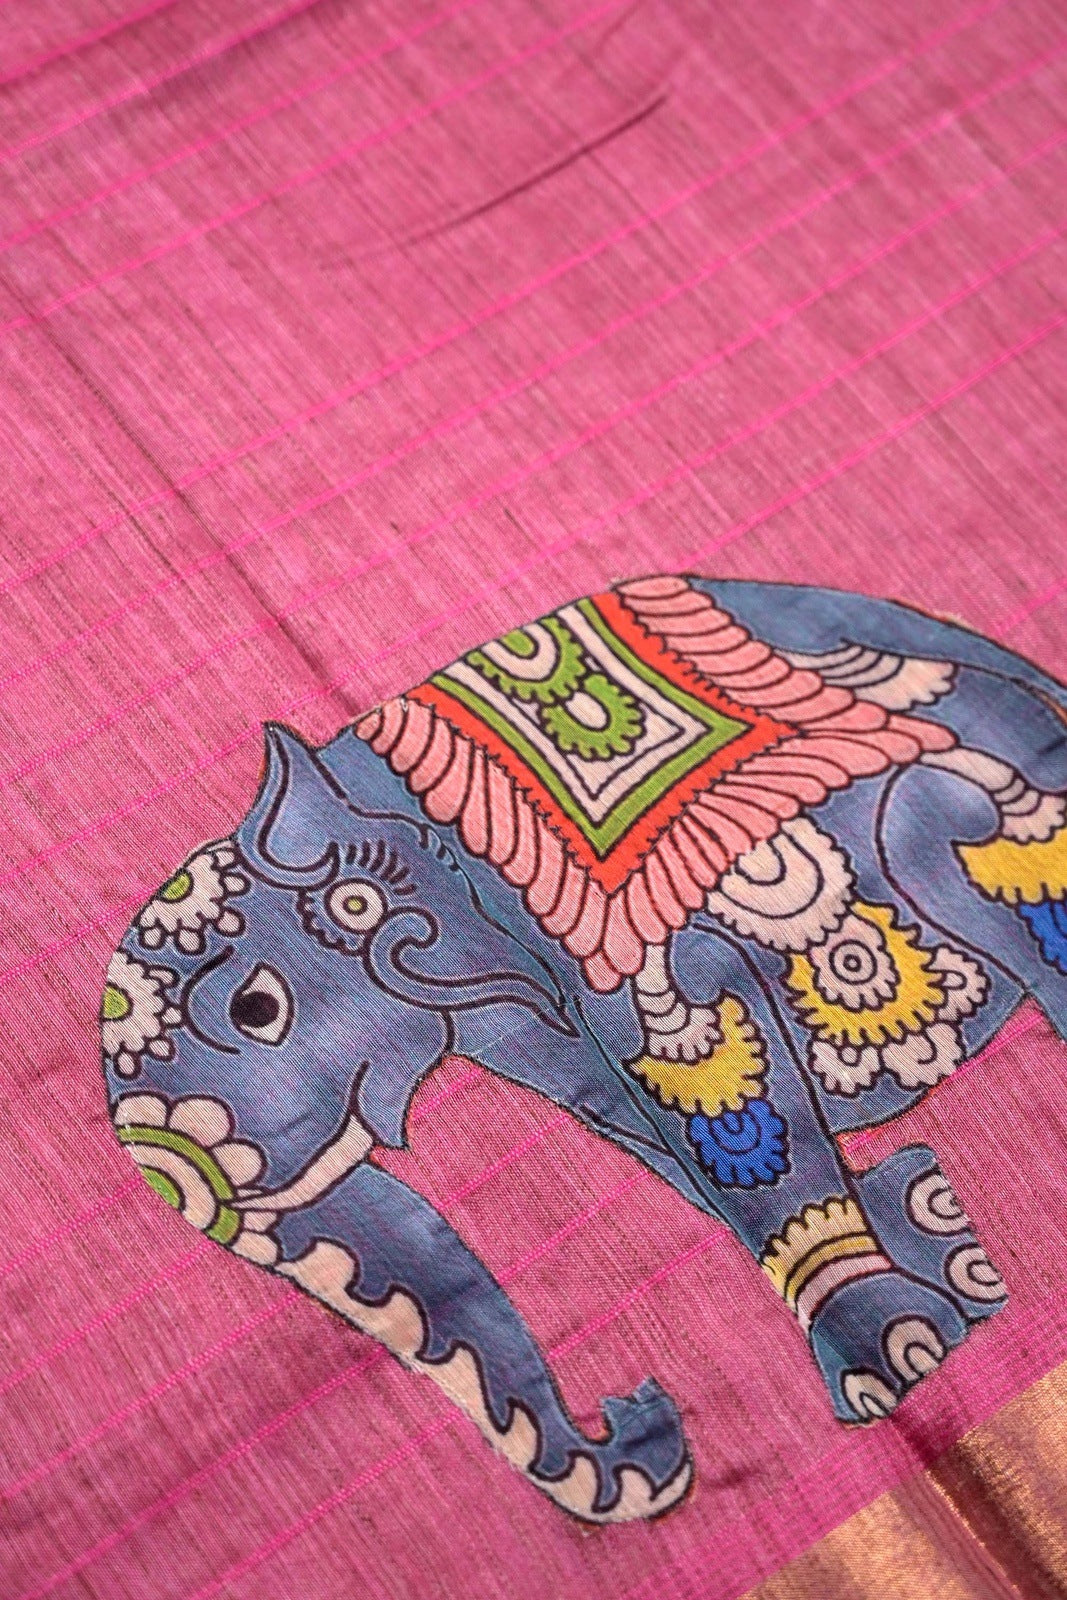 Tussar jute saree light pink color with kalamkari prints, big printed pallu, small kaddi border and printed blouse